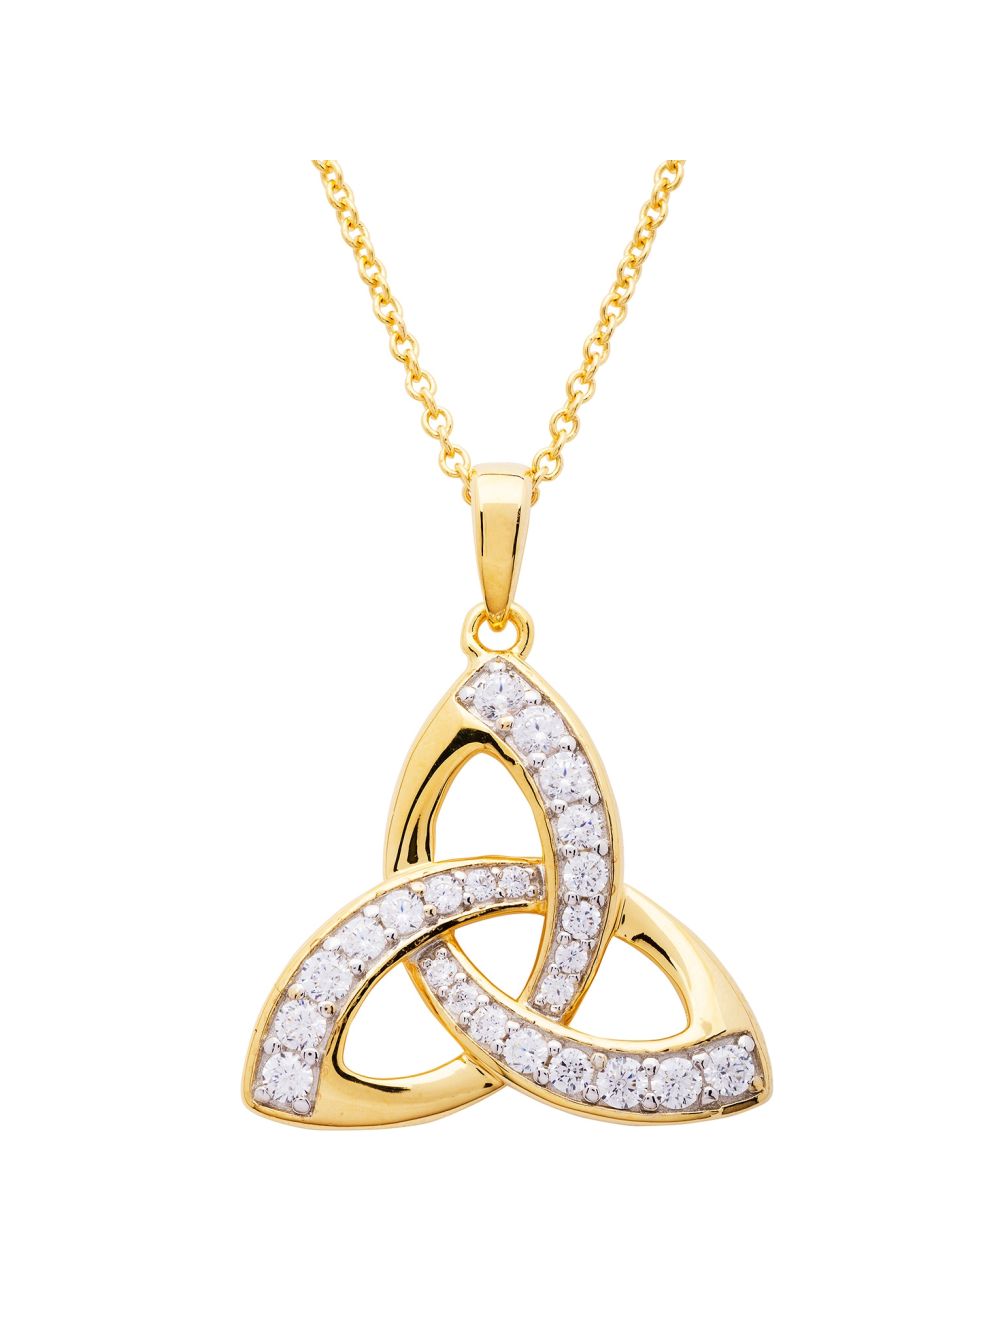 10K Rose Gold & Diamond Celtic Knot Pendant - CladdaghRings.com